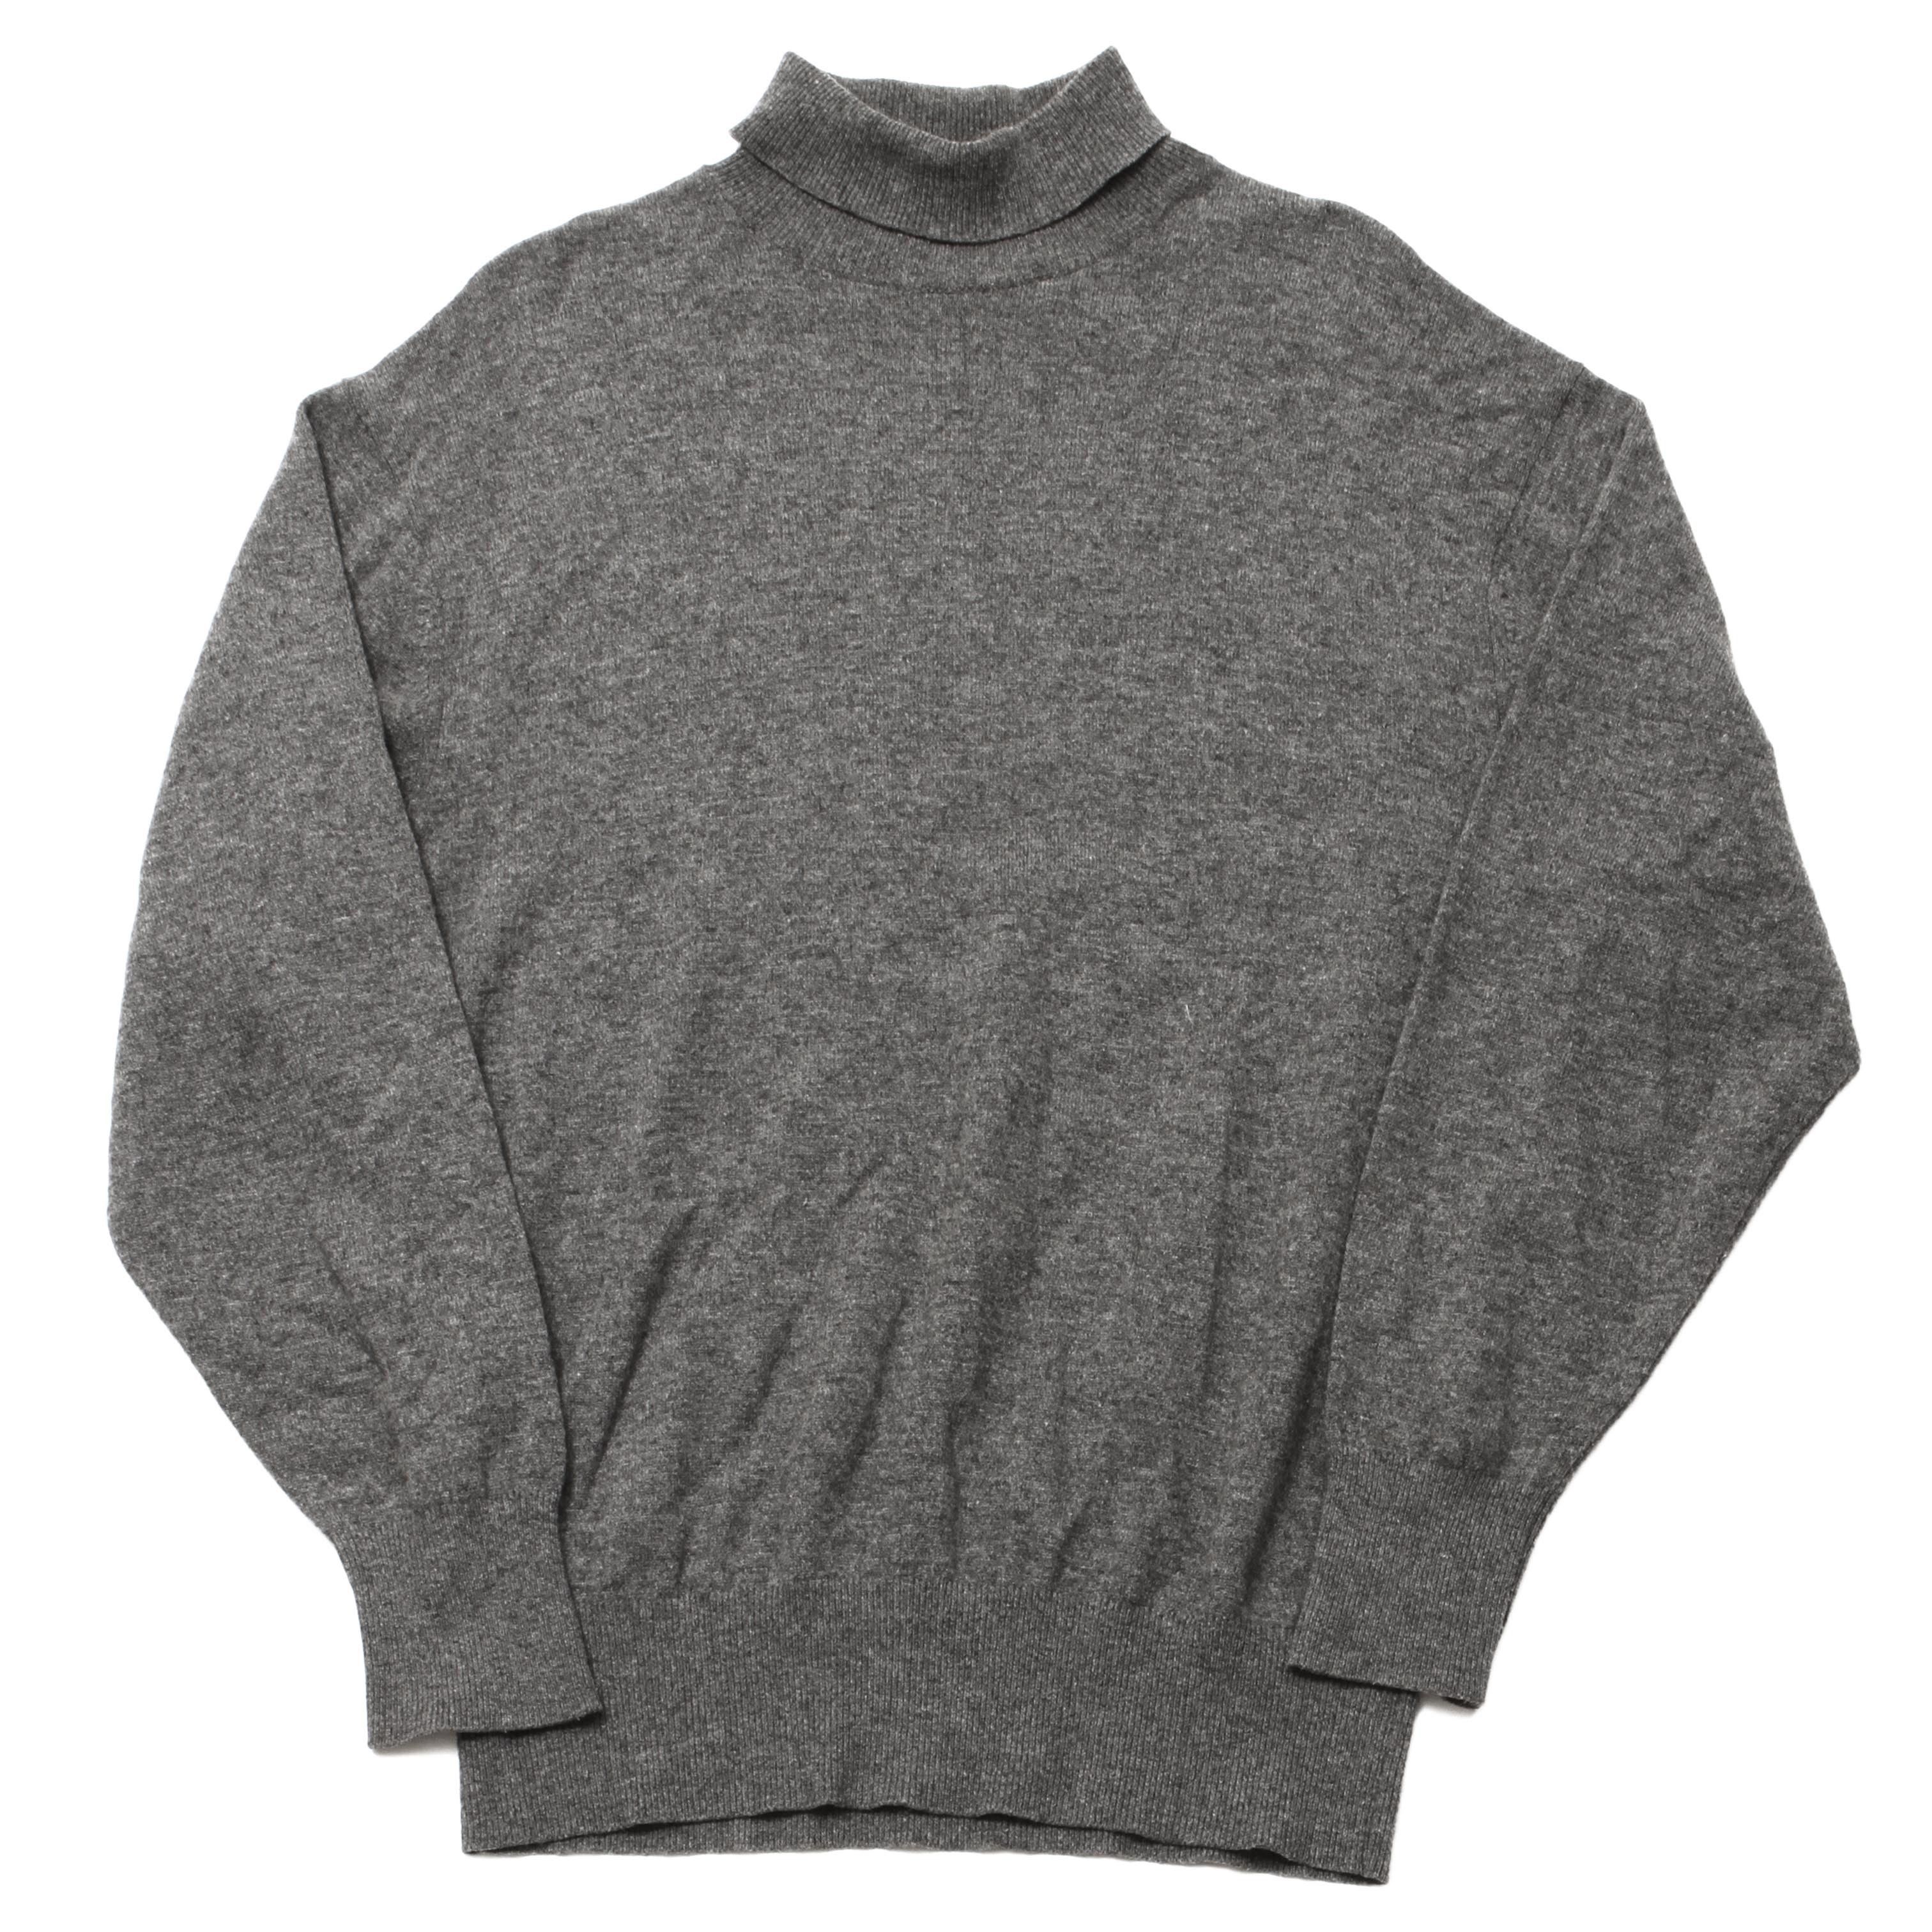 AW94 Knit Wool Turtleneck Sweater - 1